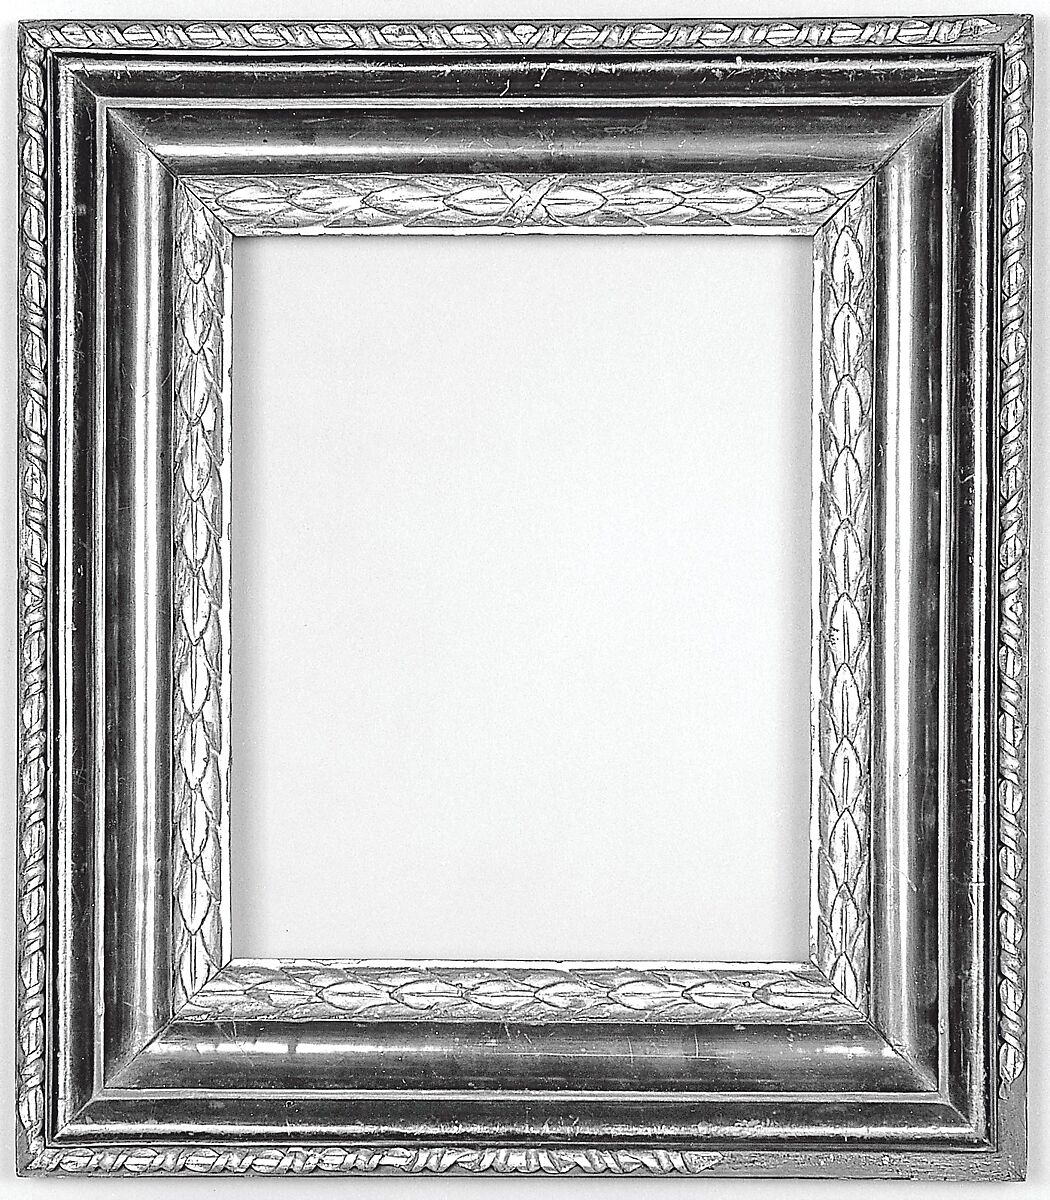 Salvator Rosa frame, Poplar back frame with ebonized pearwood upper moldings, Italian, Naples 